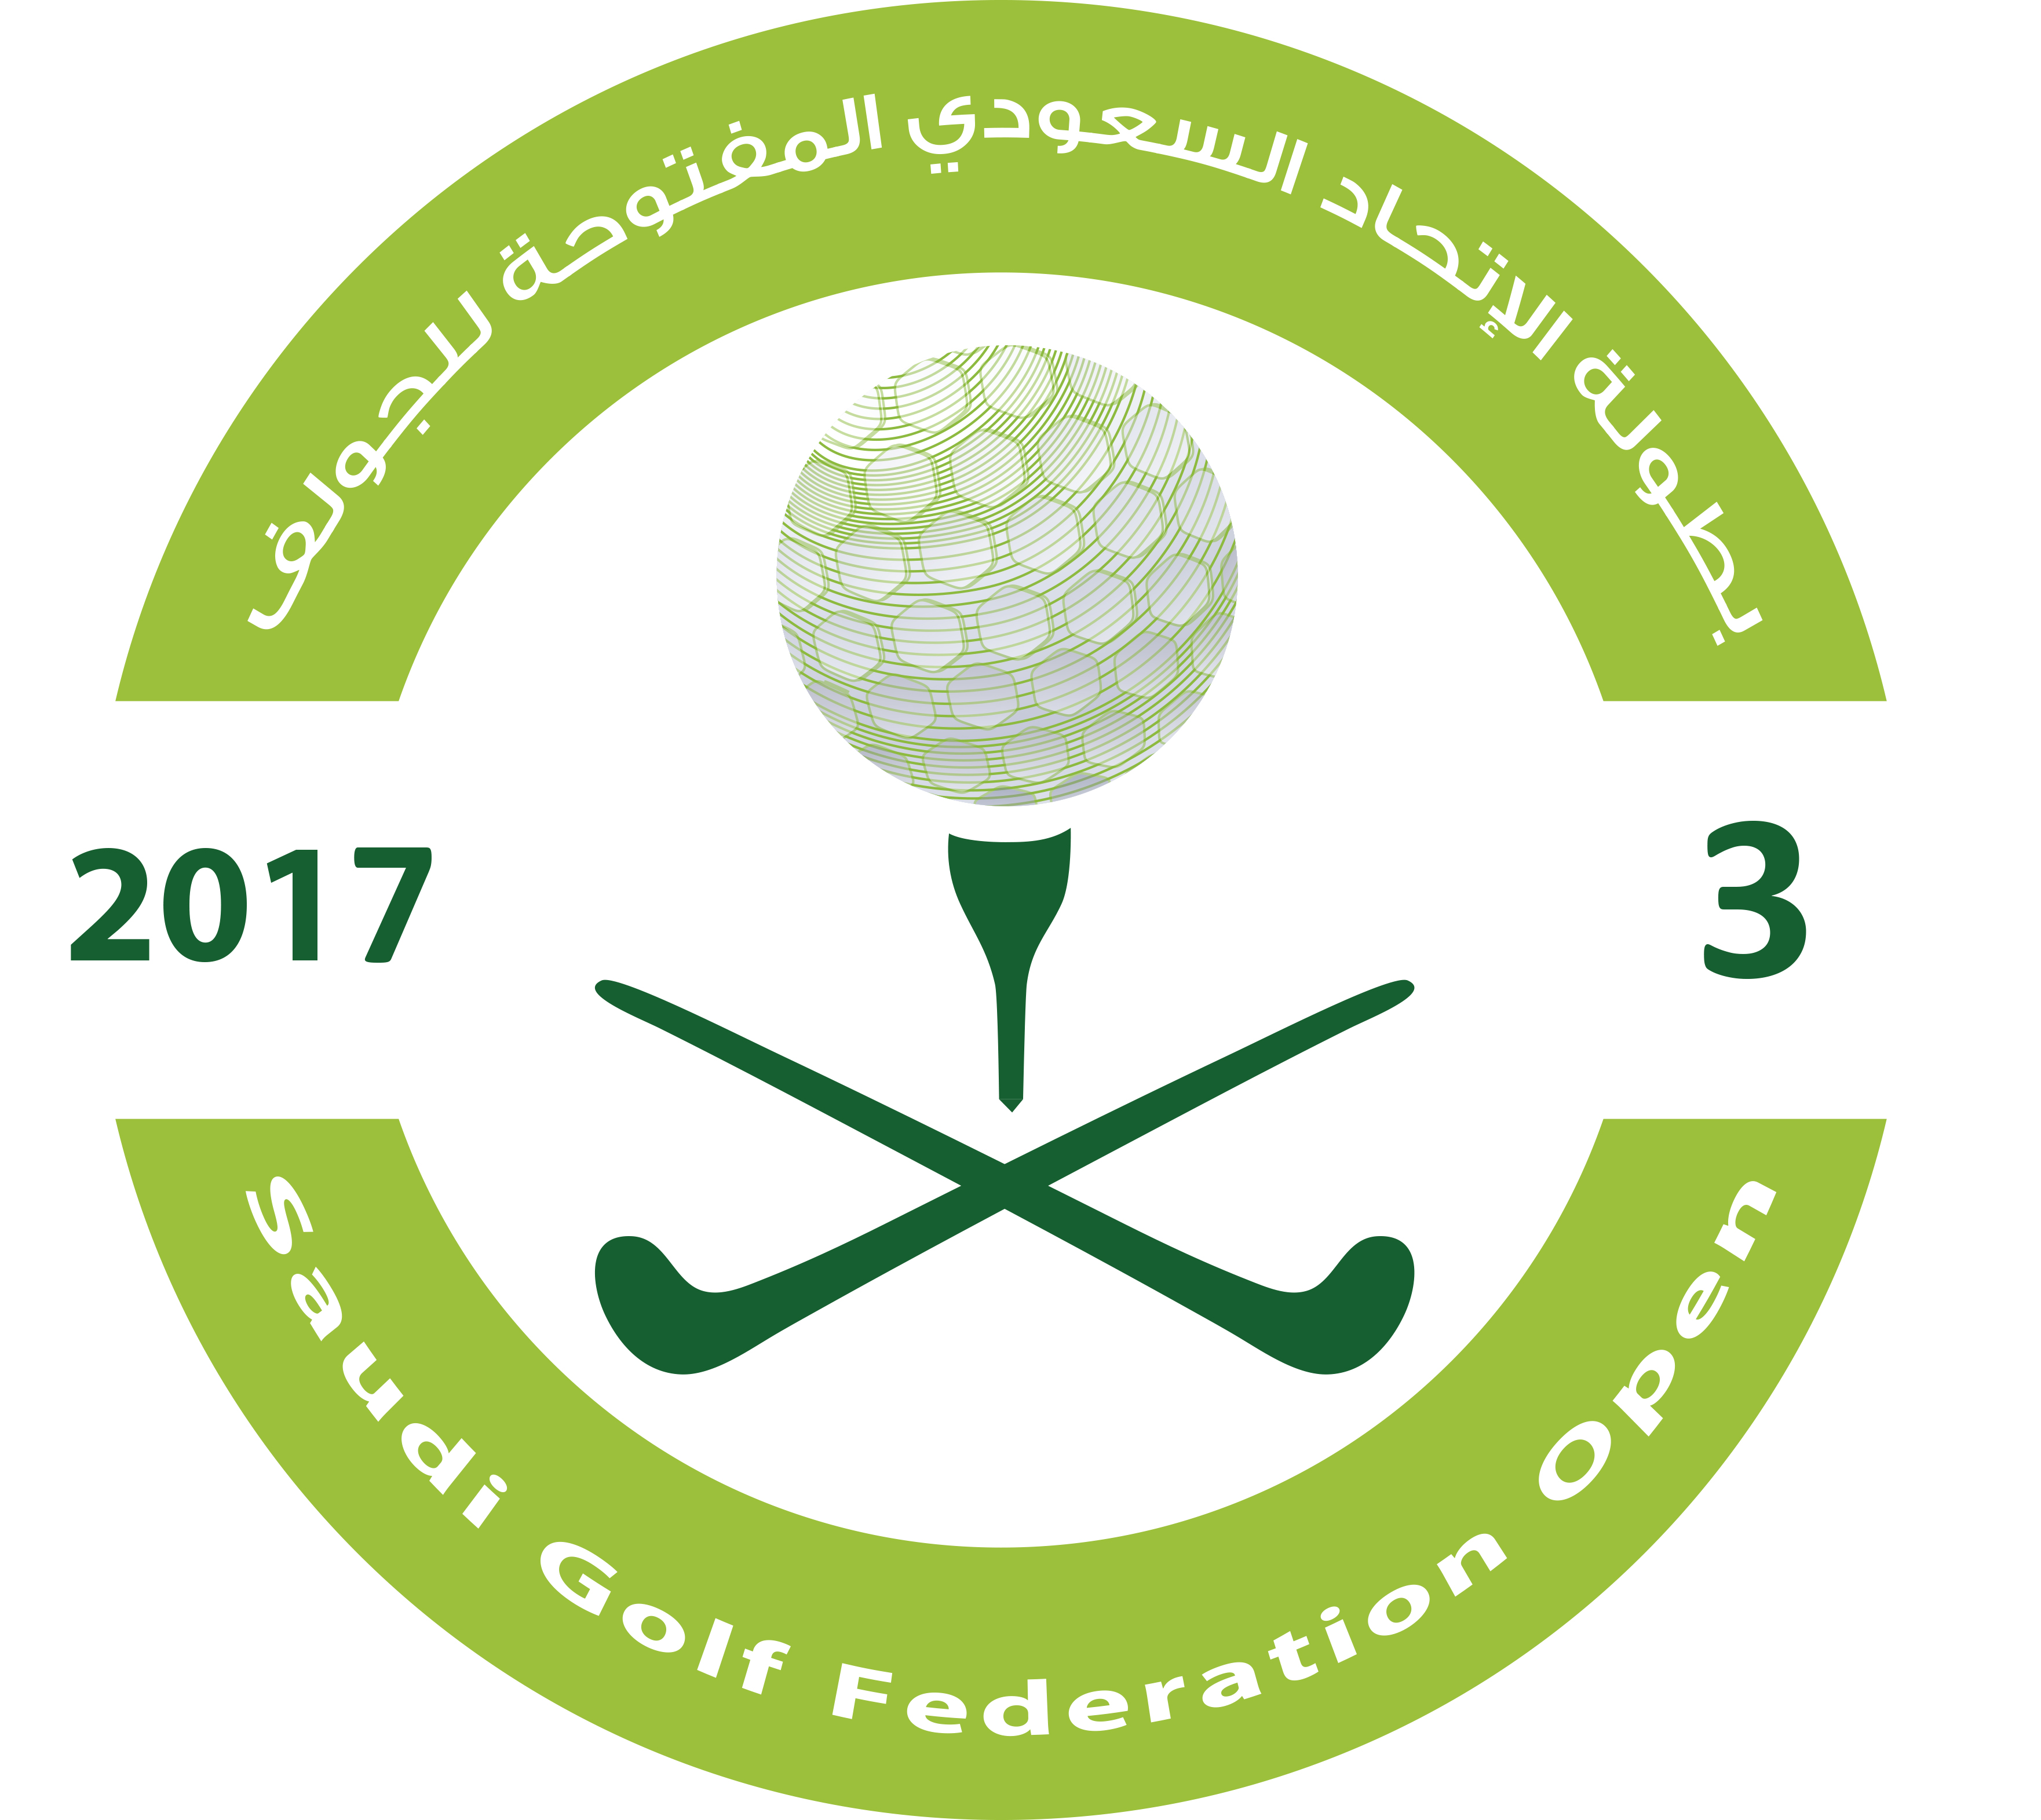 3rd Annual Saudi Open Golf Championship